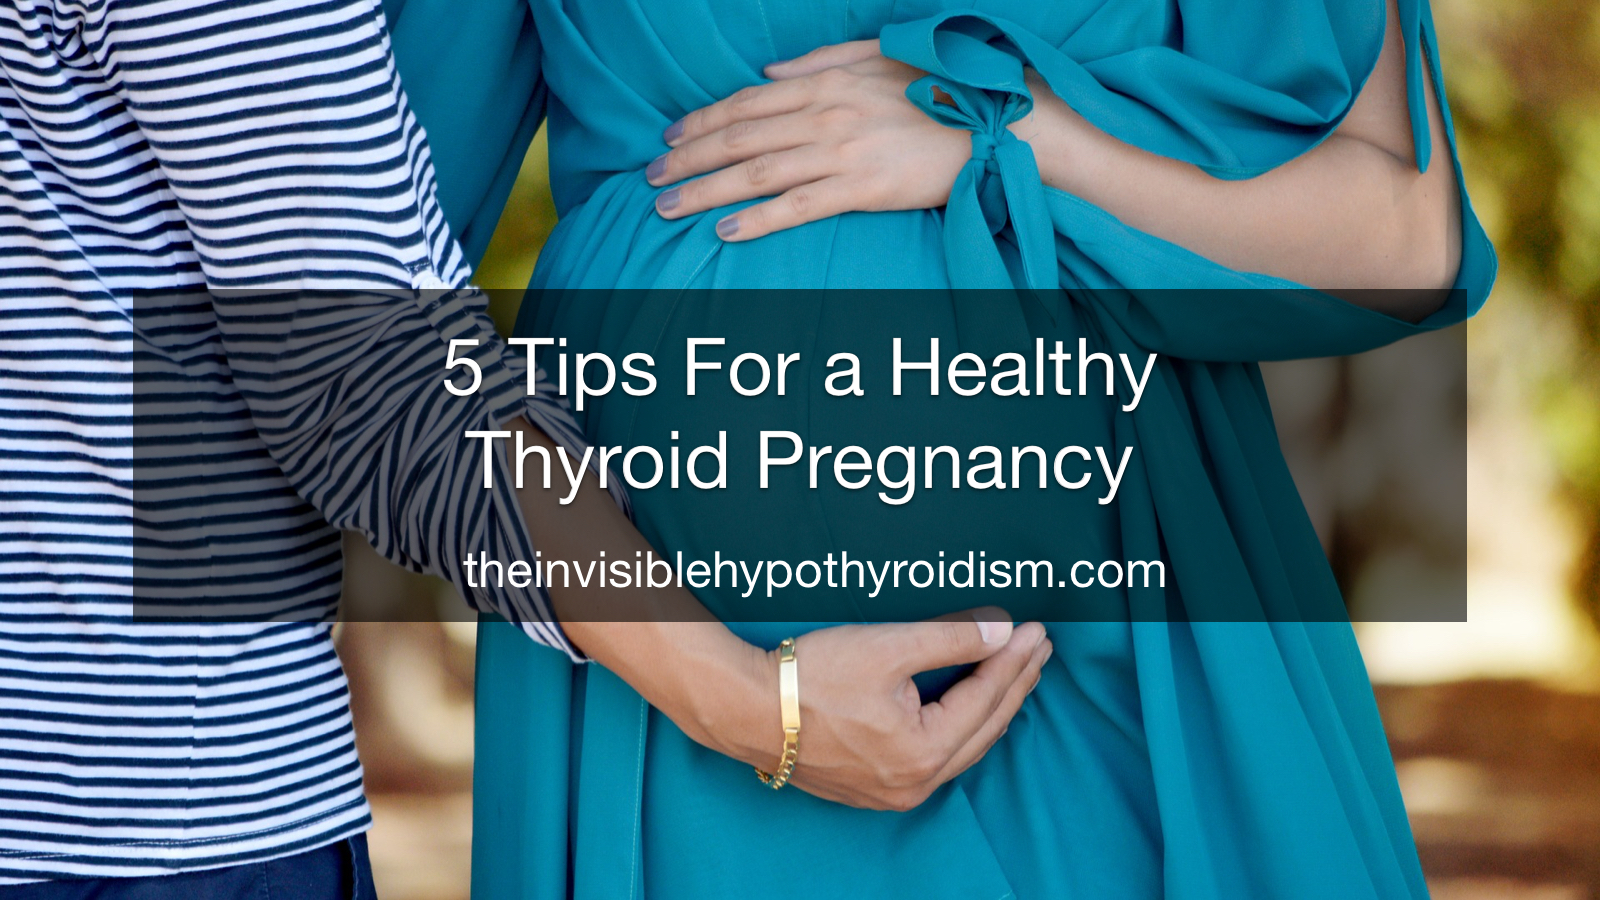 5 Tips For a Healthy Thyroid Pregnancy